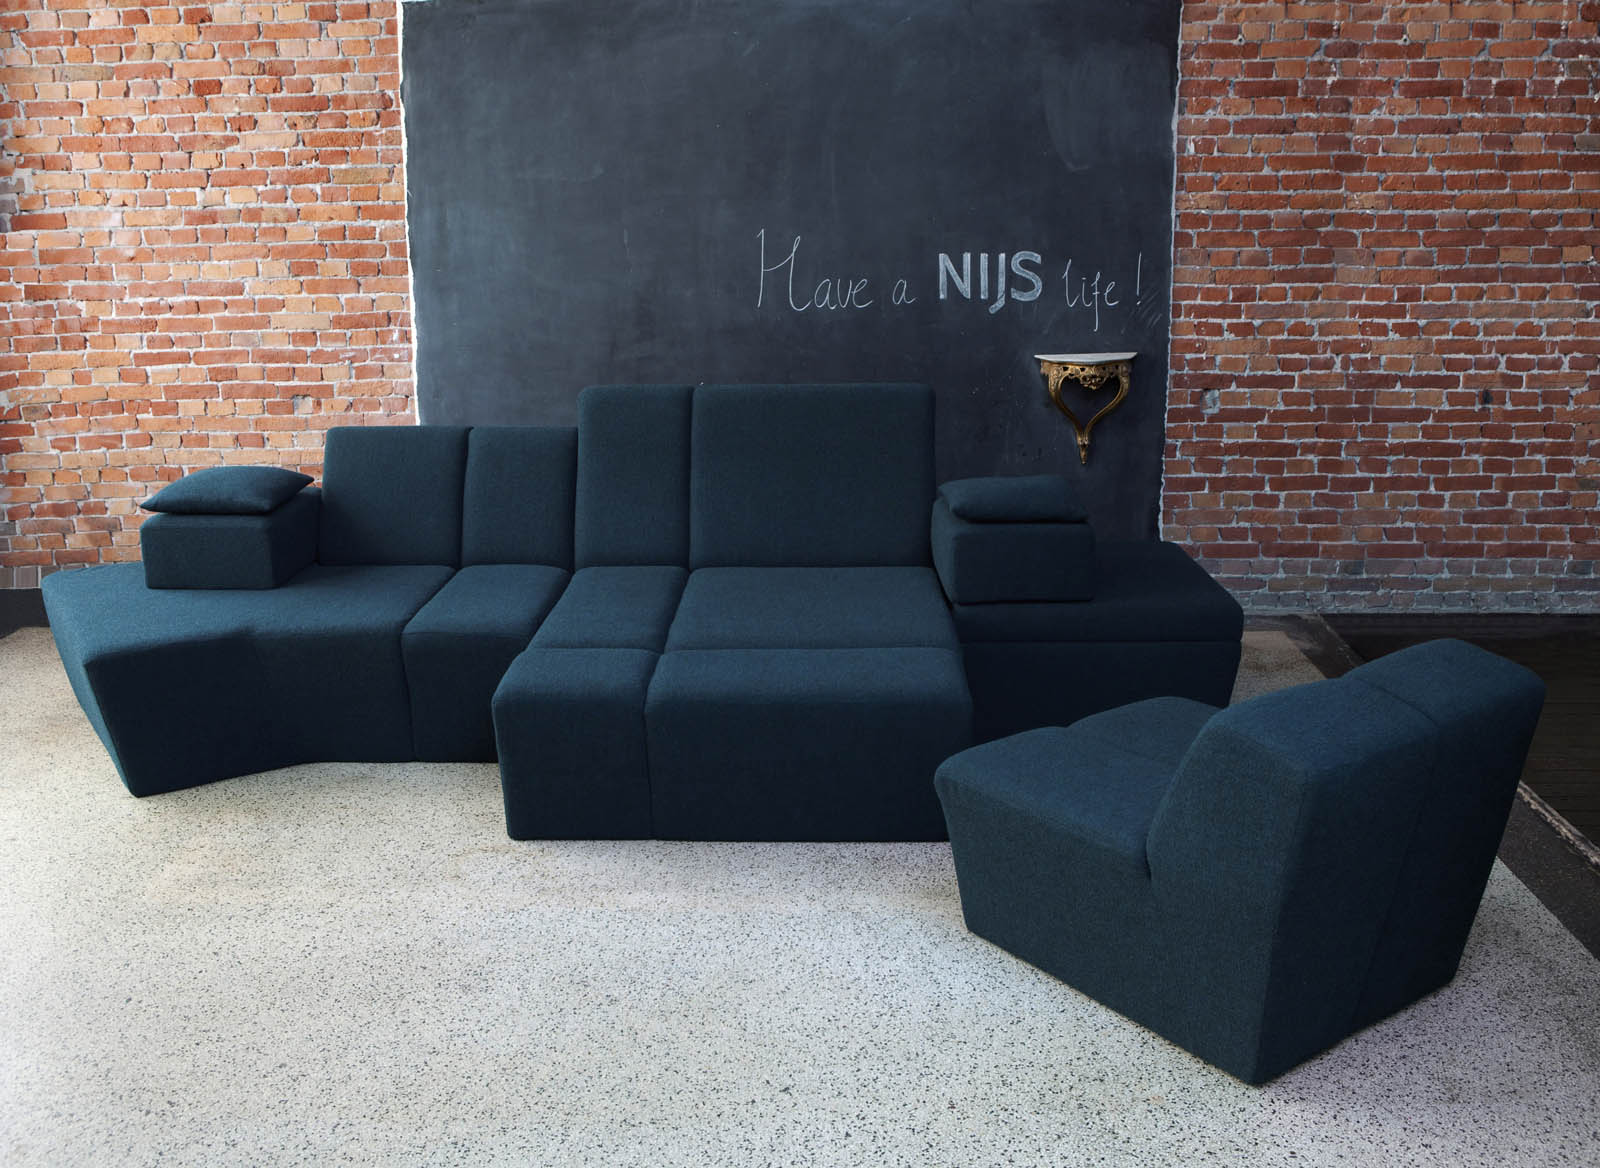 Nice one • Jeroen de Nijs architect • interior • bni